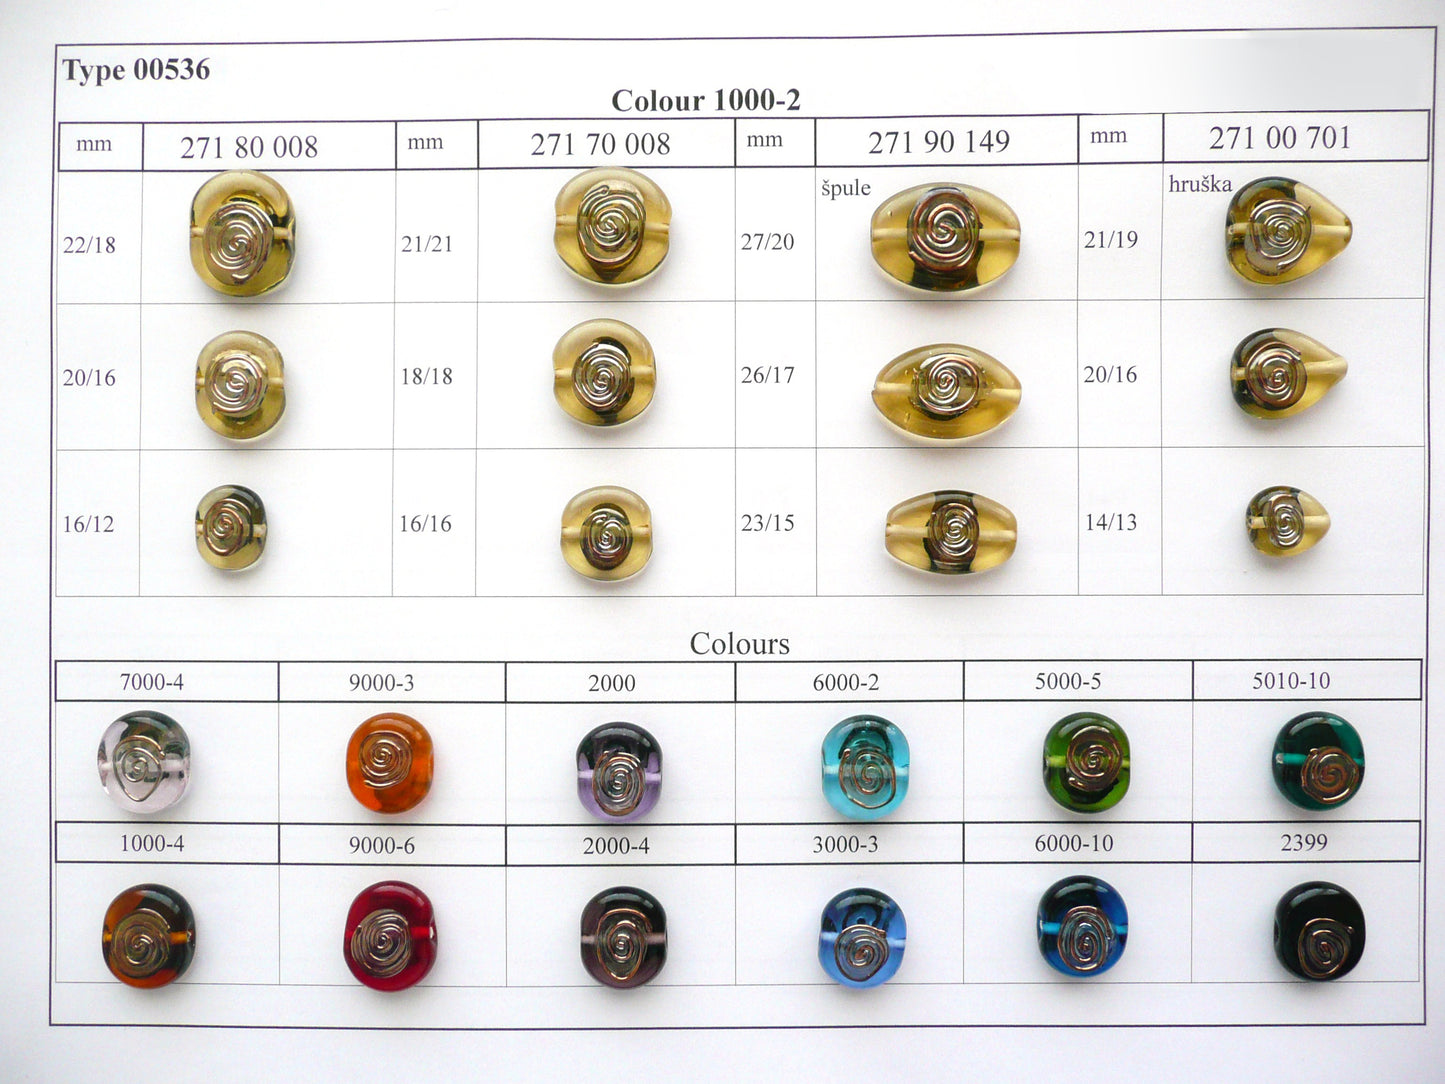 30 pcs Lampwork Beads 536 / Flat Triangle/Teardrop (271-00-701), Handmade, Preciosa Glass, Czech Republic